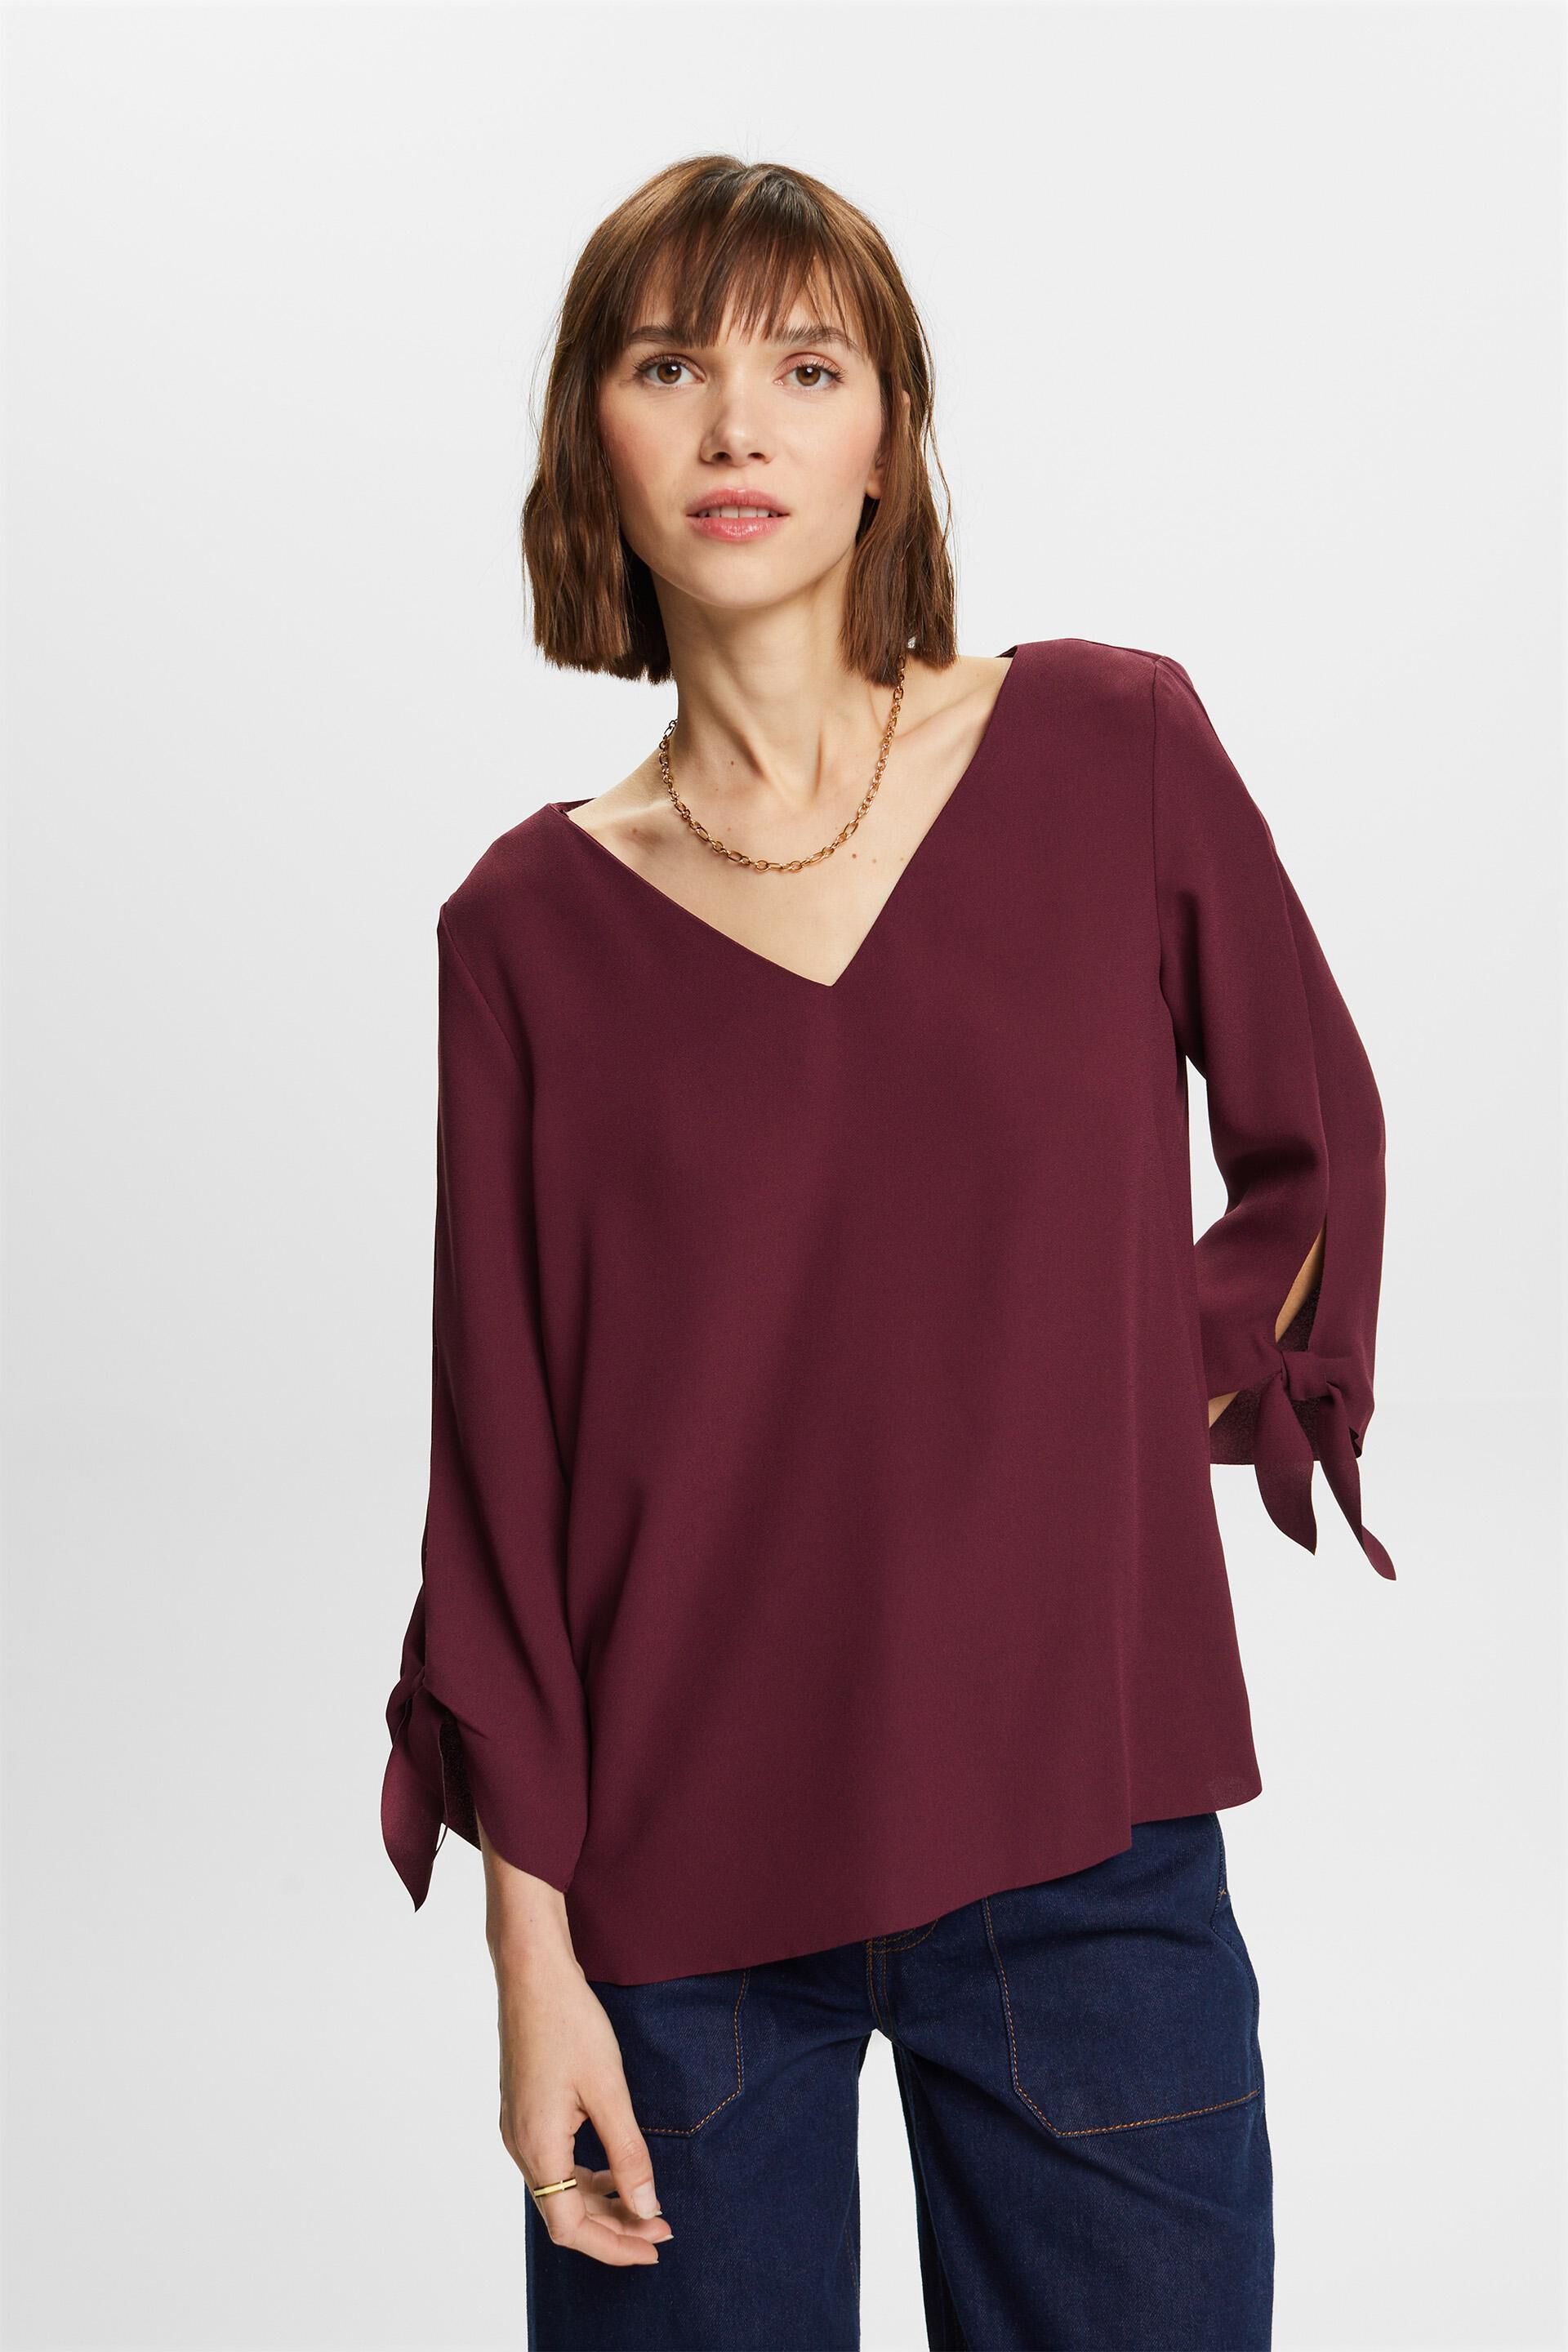 Esprit open Stretch blouse with edges